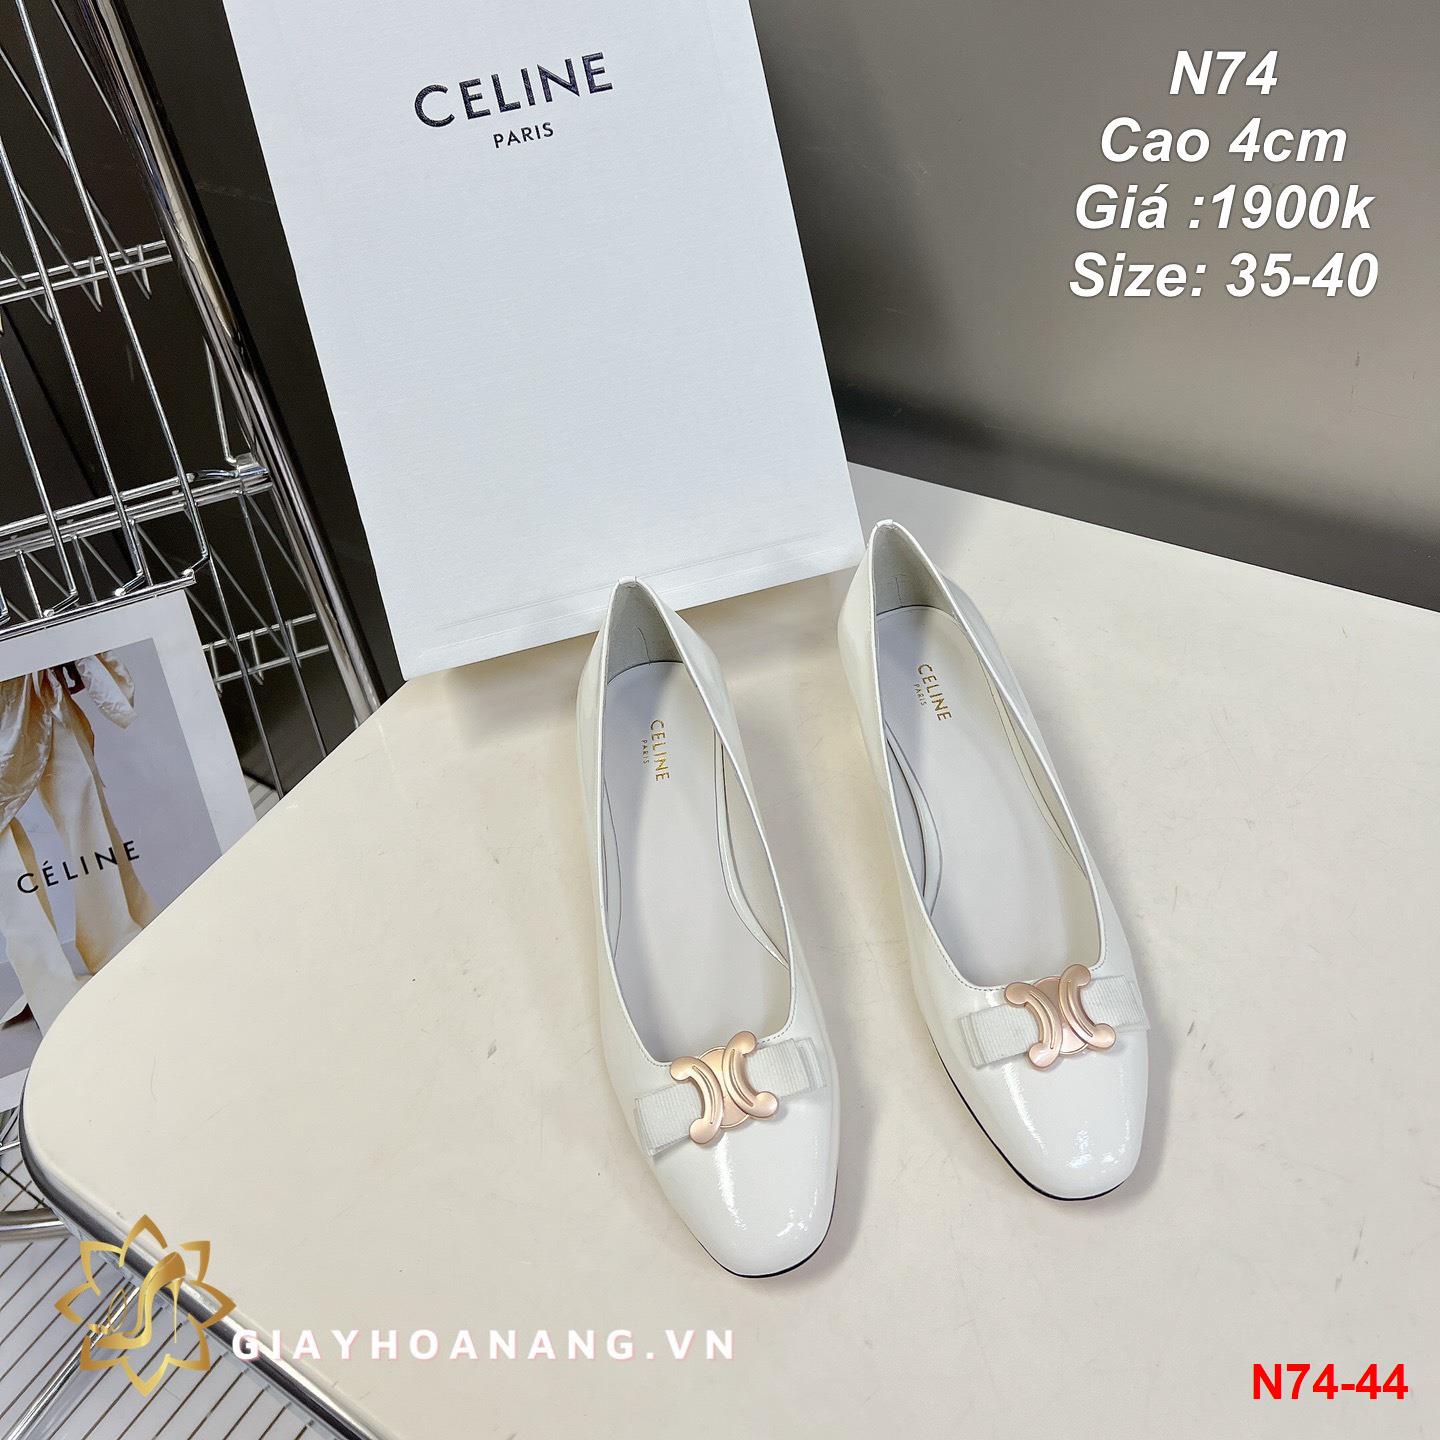 N74-44 Celine giày cao 4cm siêu cấp